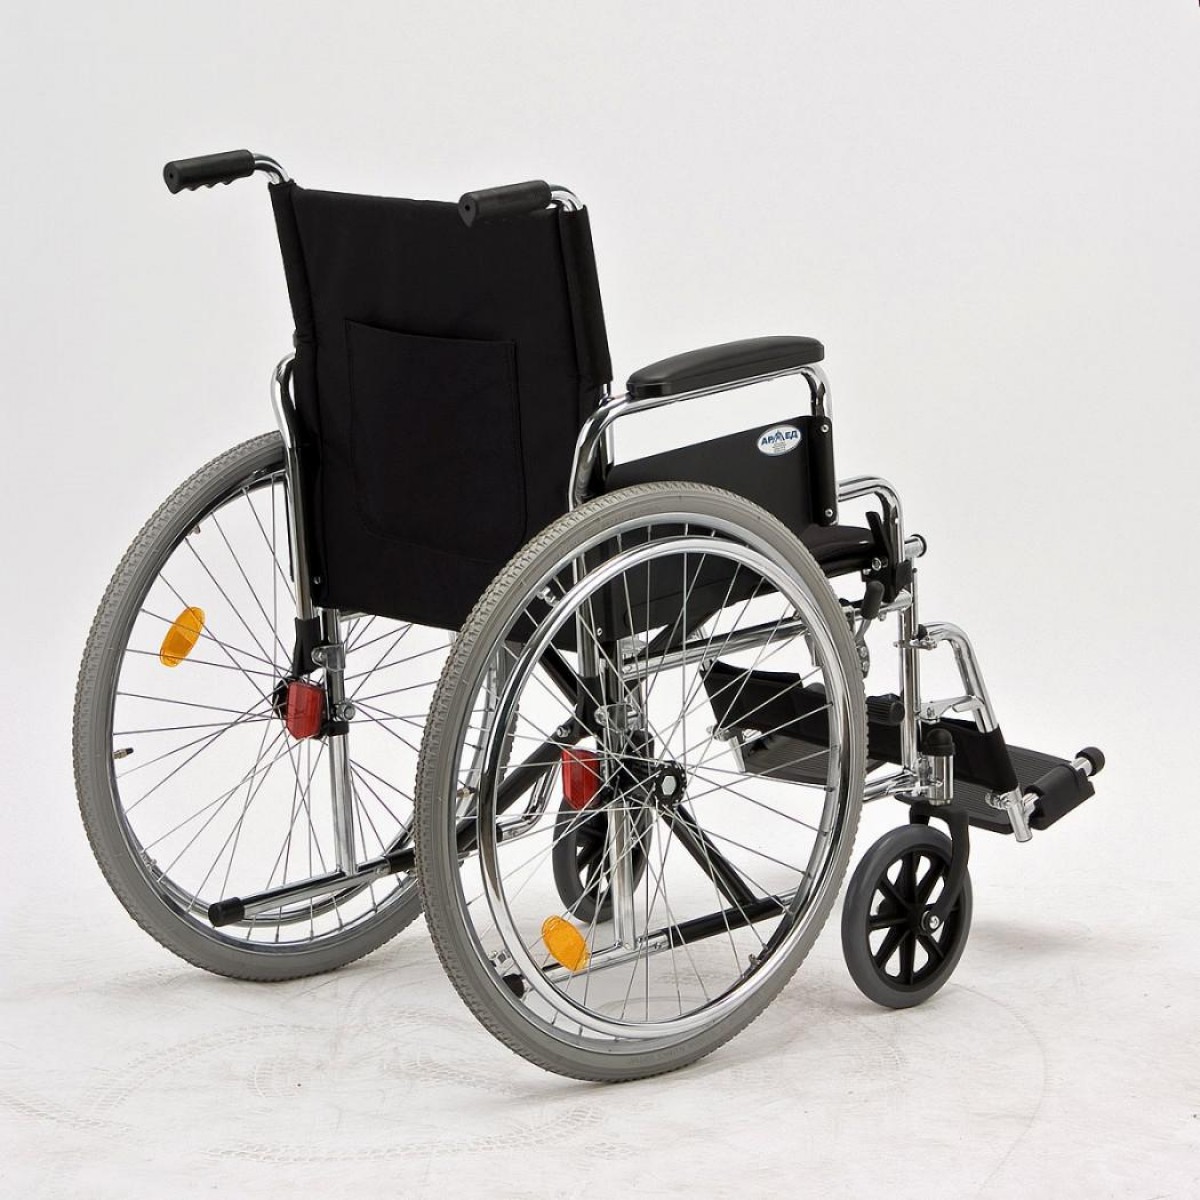 Кресло-коляска для инвалидов Армед н010. Кресло-коляска Армед h 007. Инвалидная коляска Армед н035. Инвалидная коляска Armed h002.